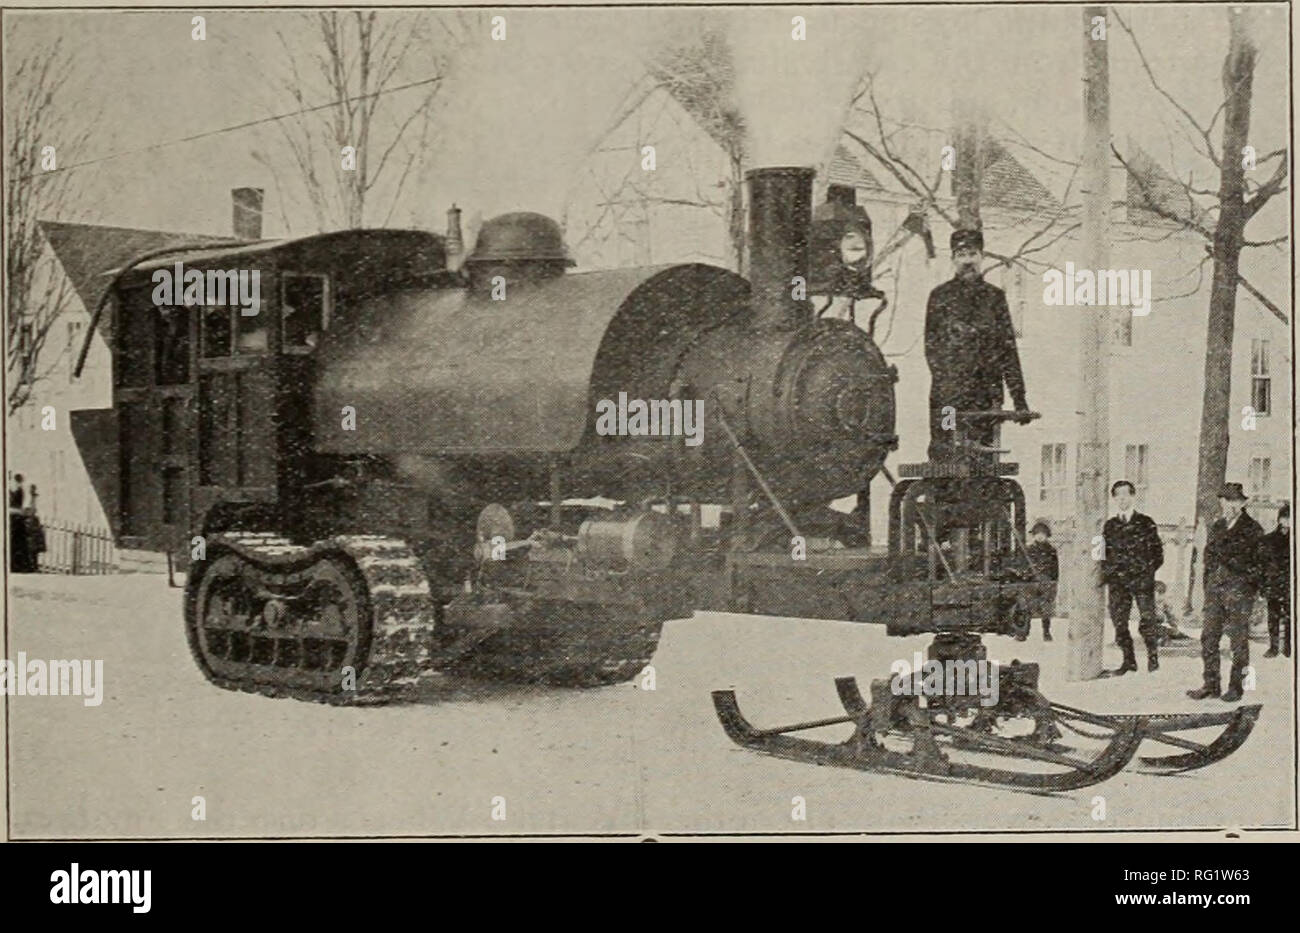 STEAM PARK PLACE NEW YORK BAXTER STEAM ENGINE ANTIQUE 1873 ADVERTISEMENT 